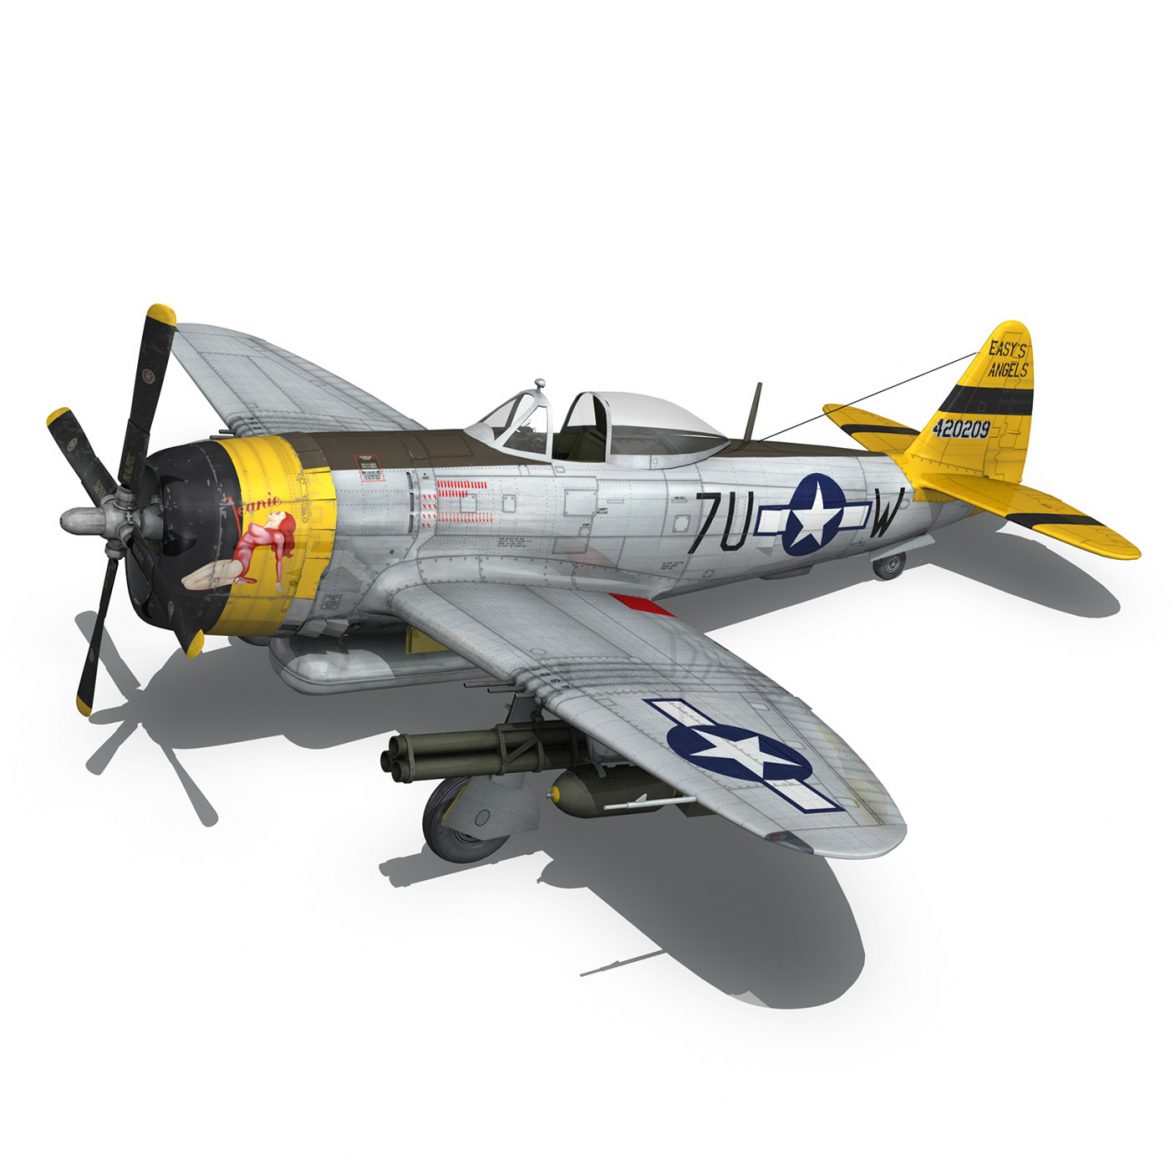 republic p-47d thunderbolt – eileen 3d model 3ds fbx c4d lwo obj 299943